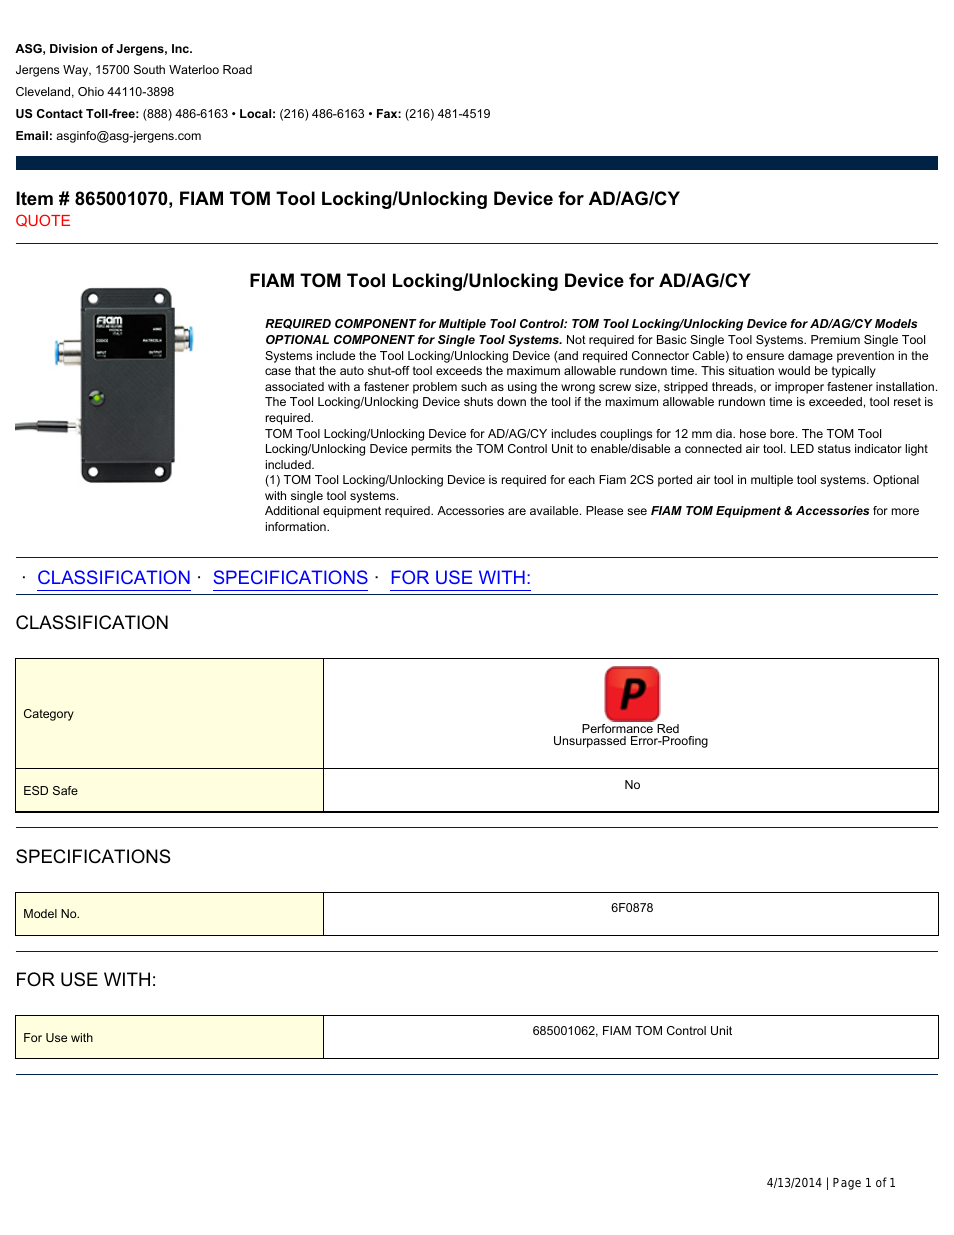 865001070 FIAM TOM Tool Locking/Unlocking Device for AD/AG/CY